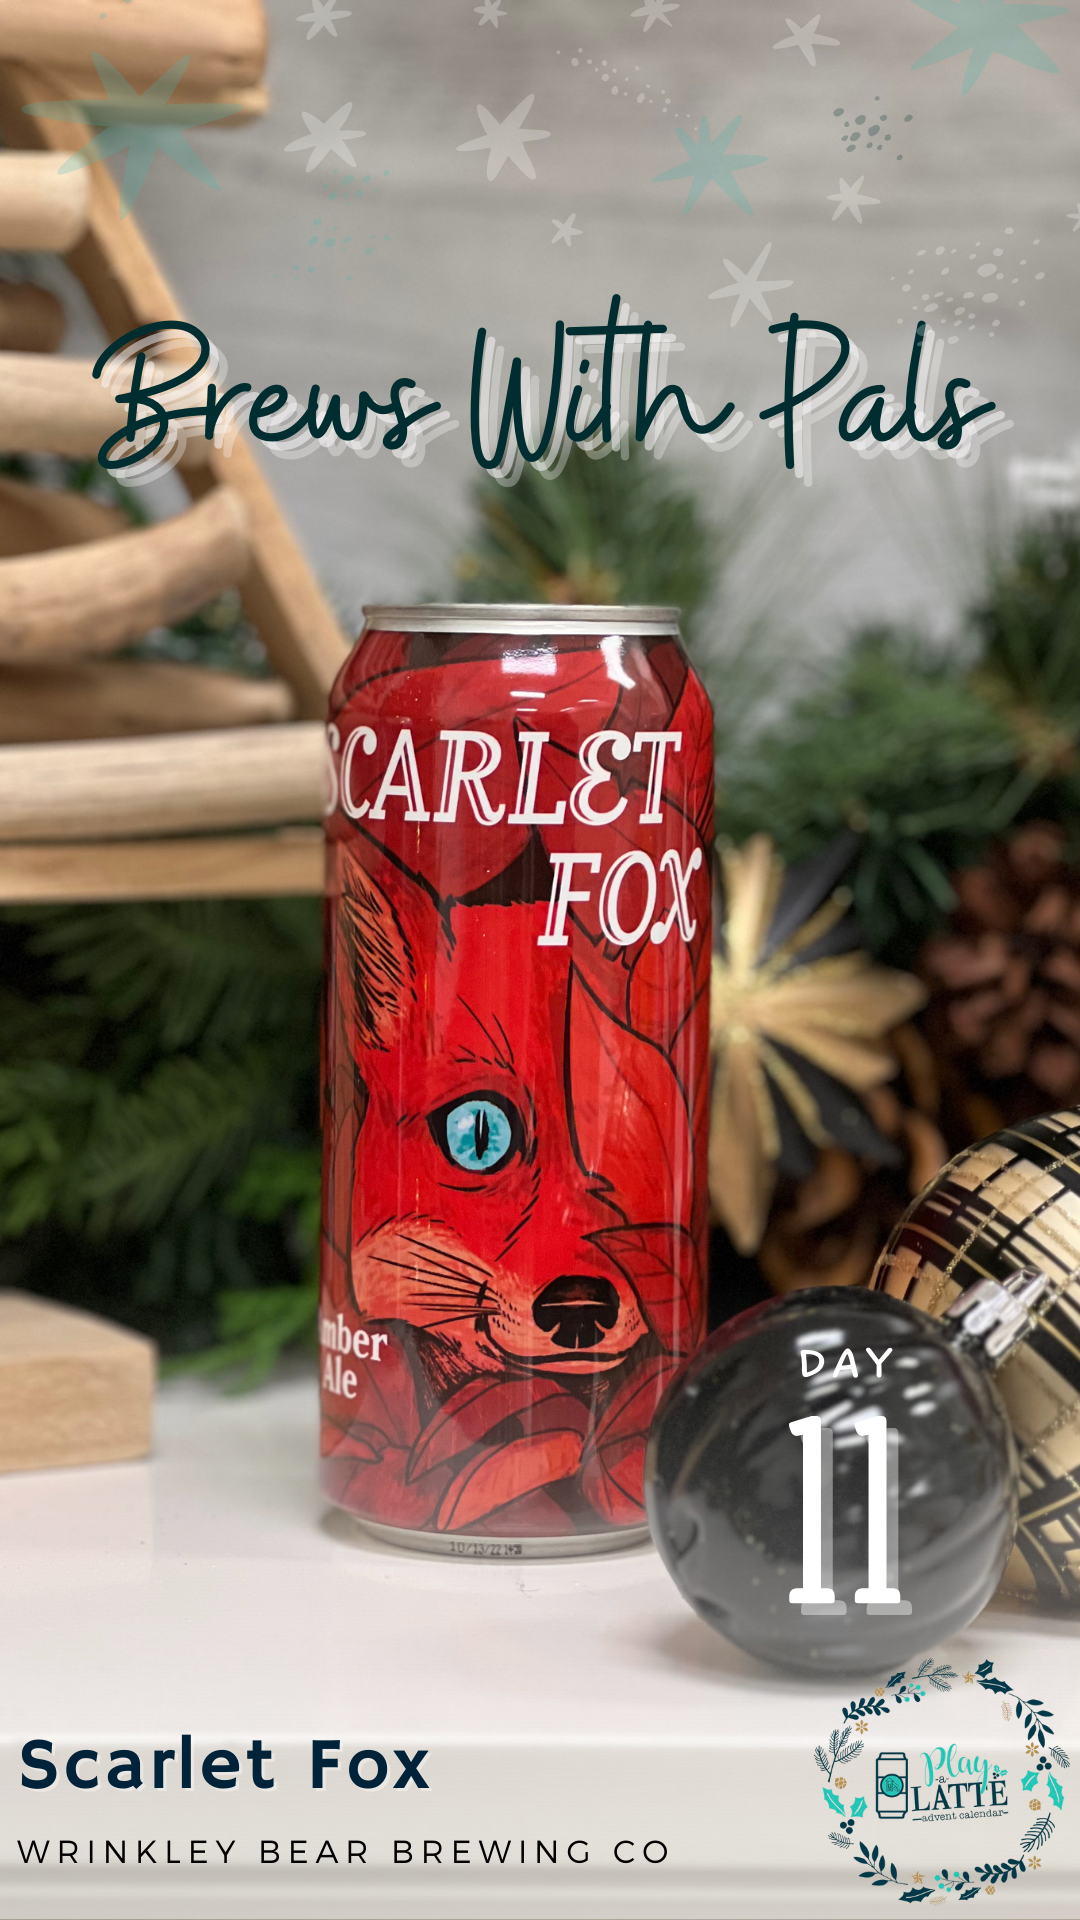 Day 11 - Scarlett Fox